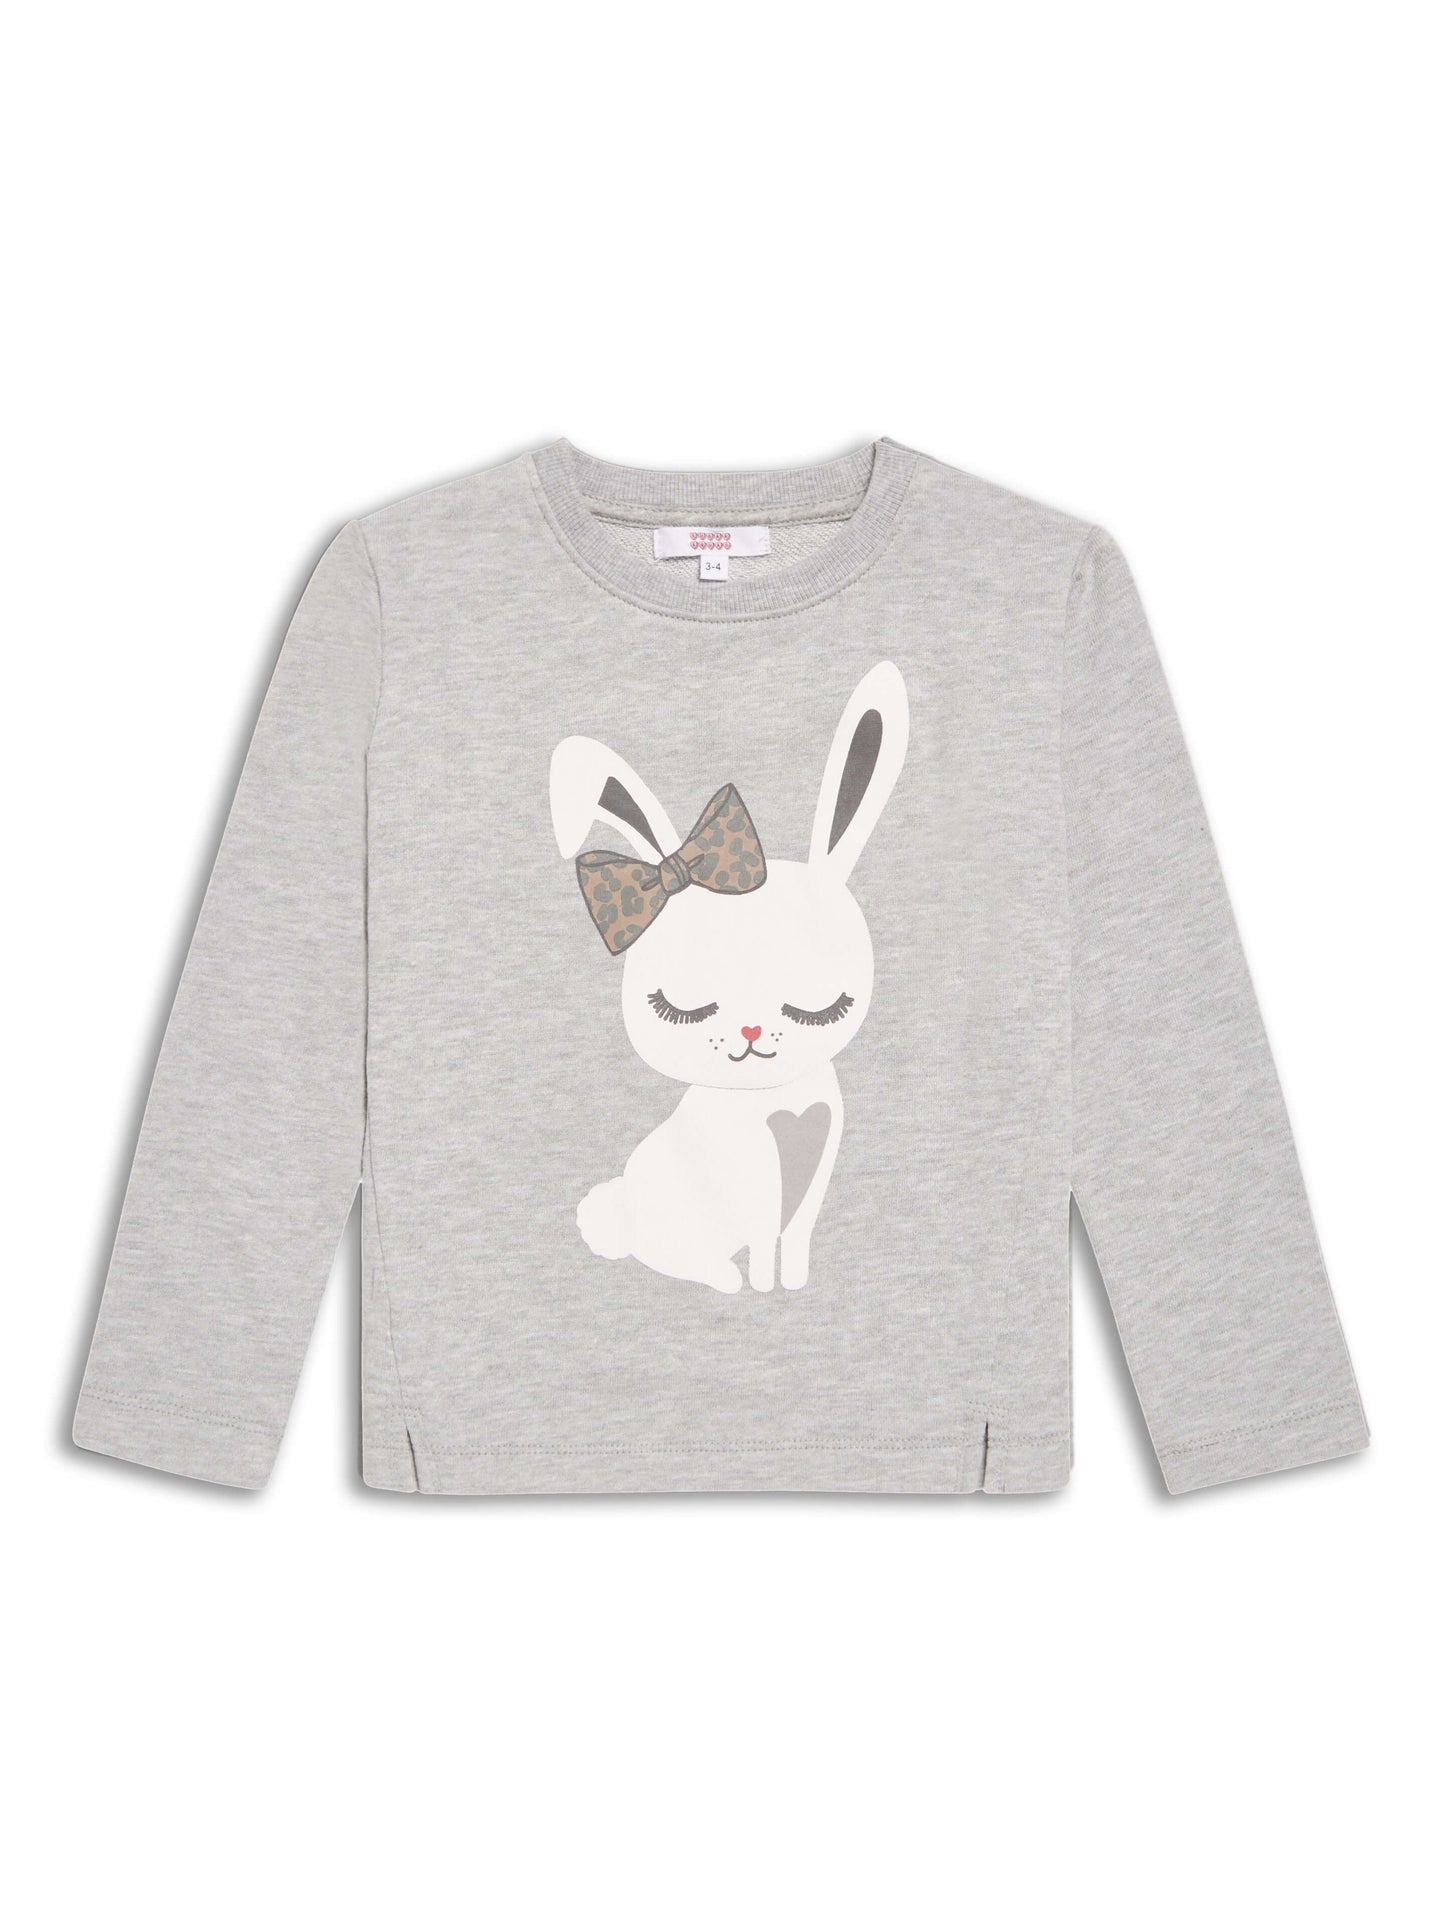 Sweet Bunny Fashion Sweater